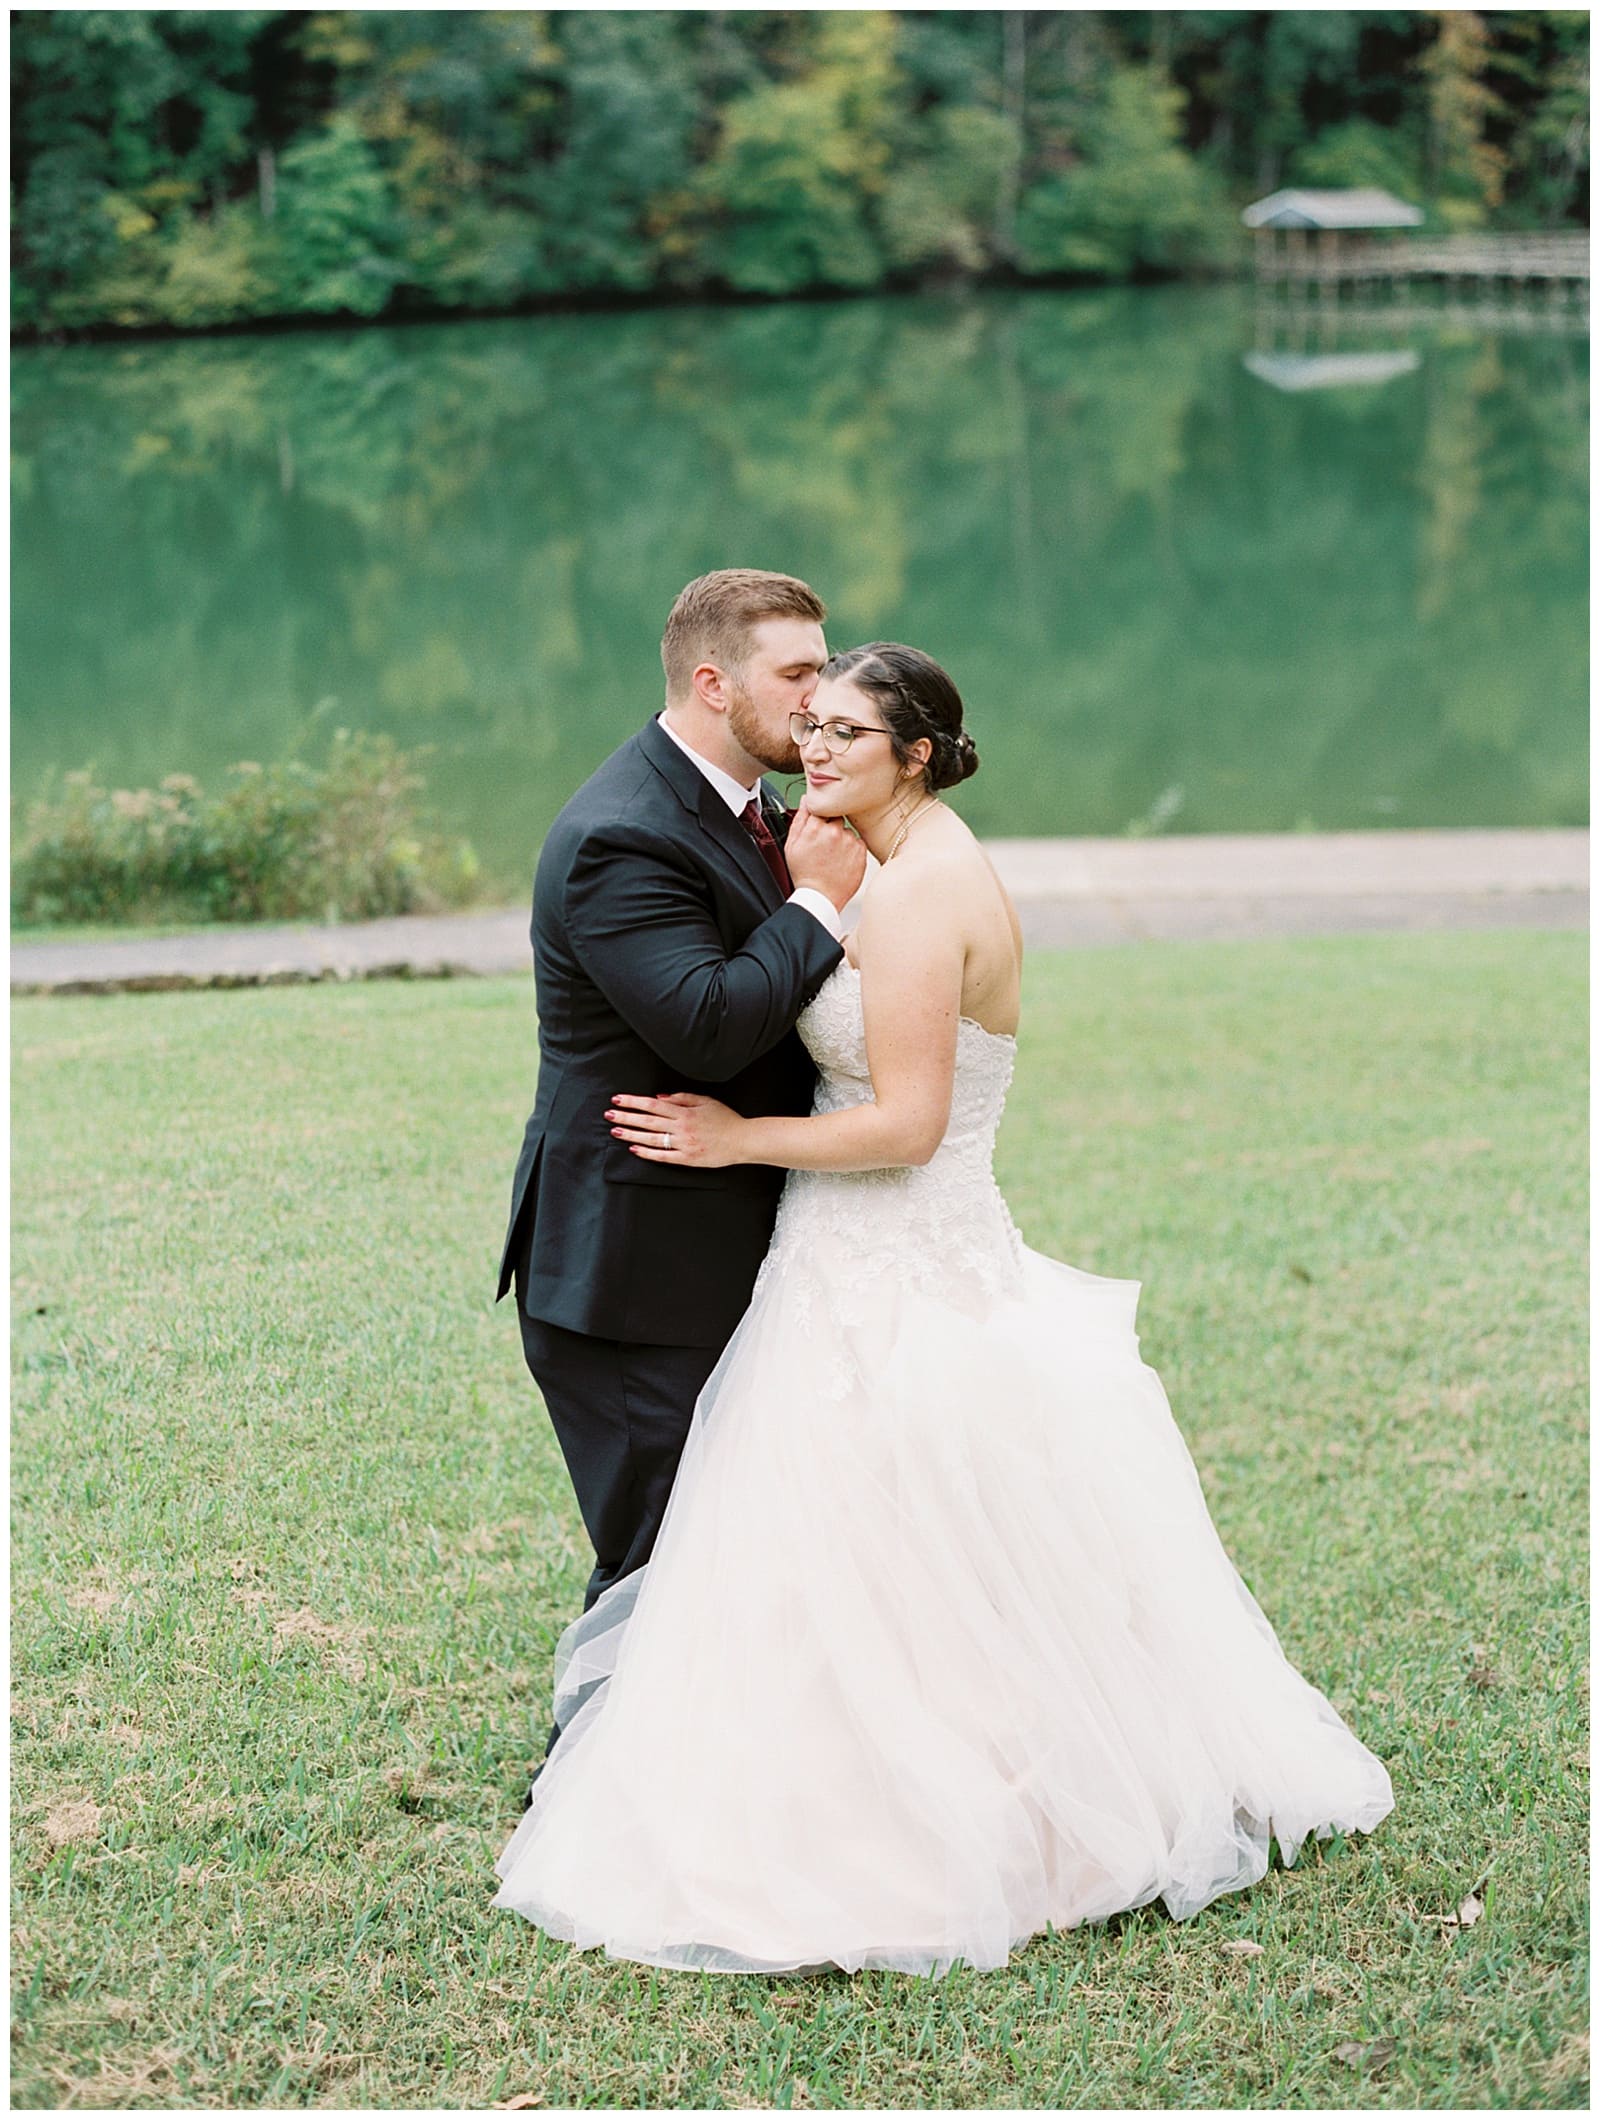 Danielle-Defayette-Photography-Steele-Creek-Park-Wedding_0025.jpg